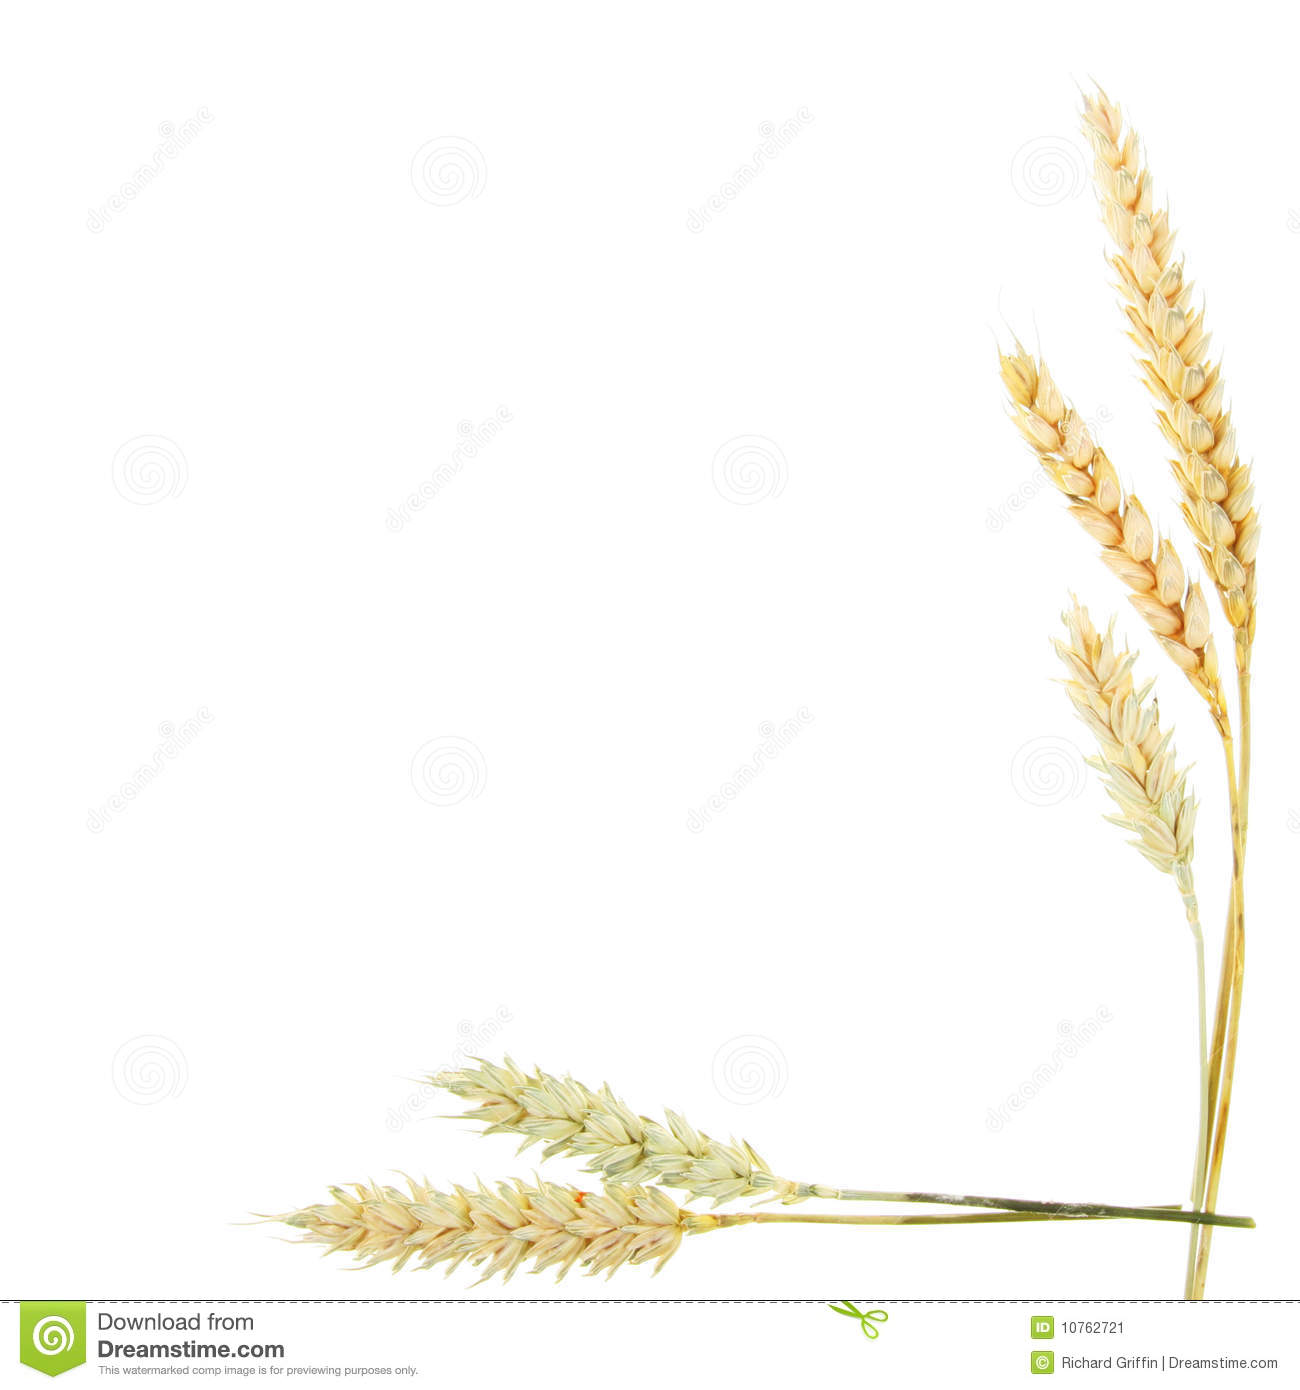 Wheat Ears Border Stock Image   Image  10762721